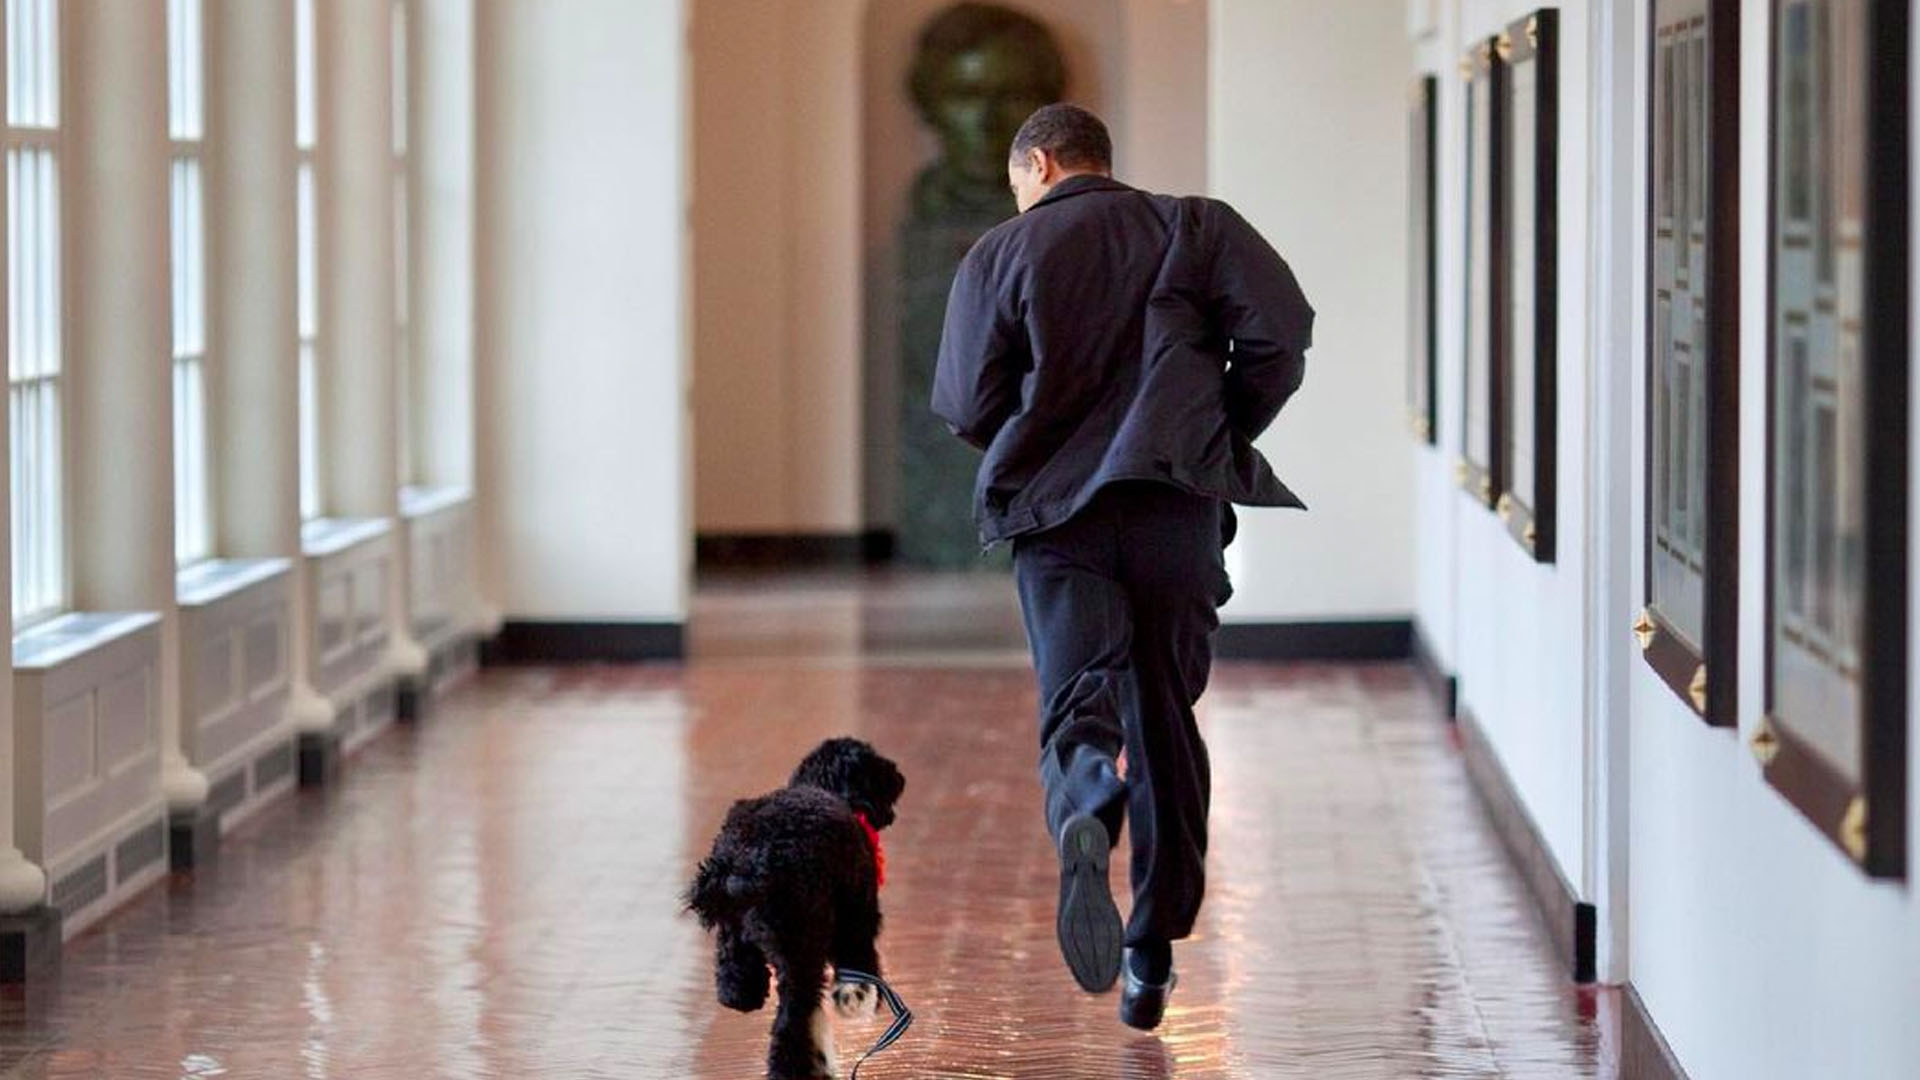 Obama bids farewell to family dog